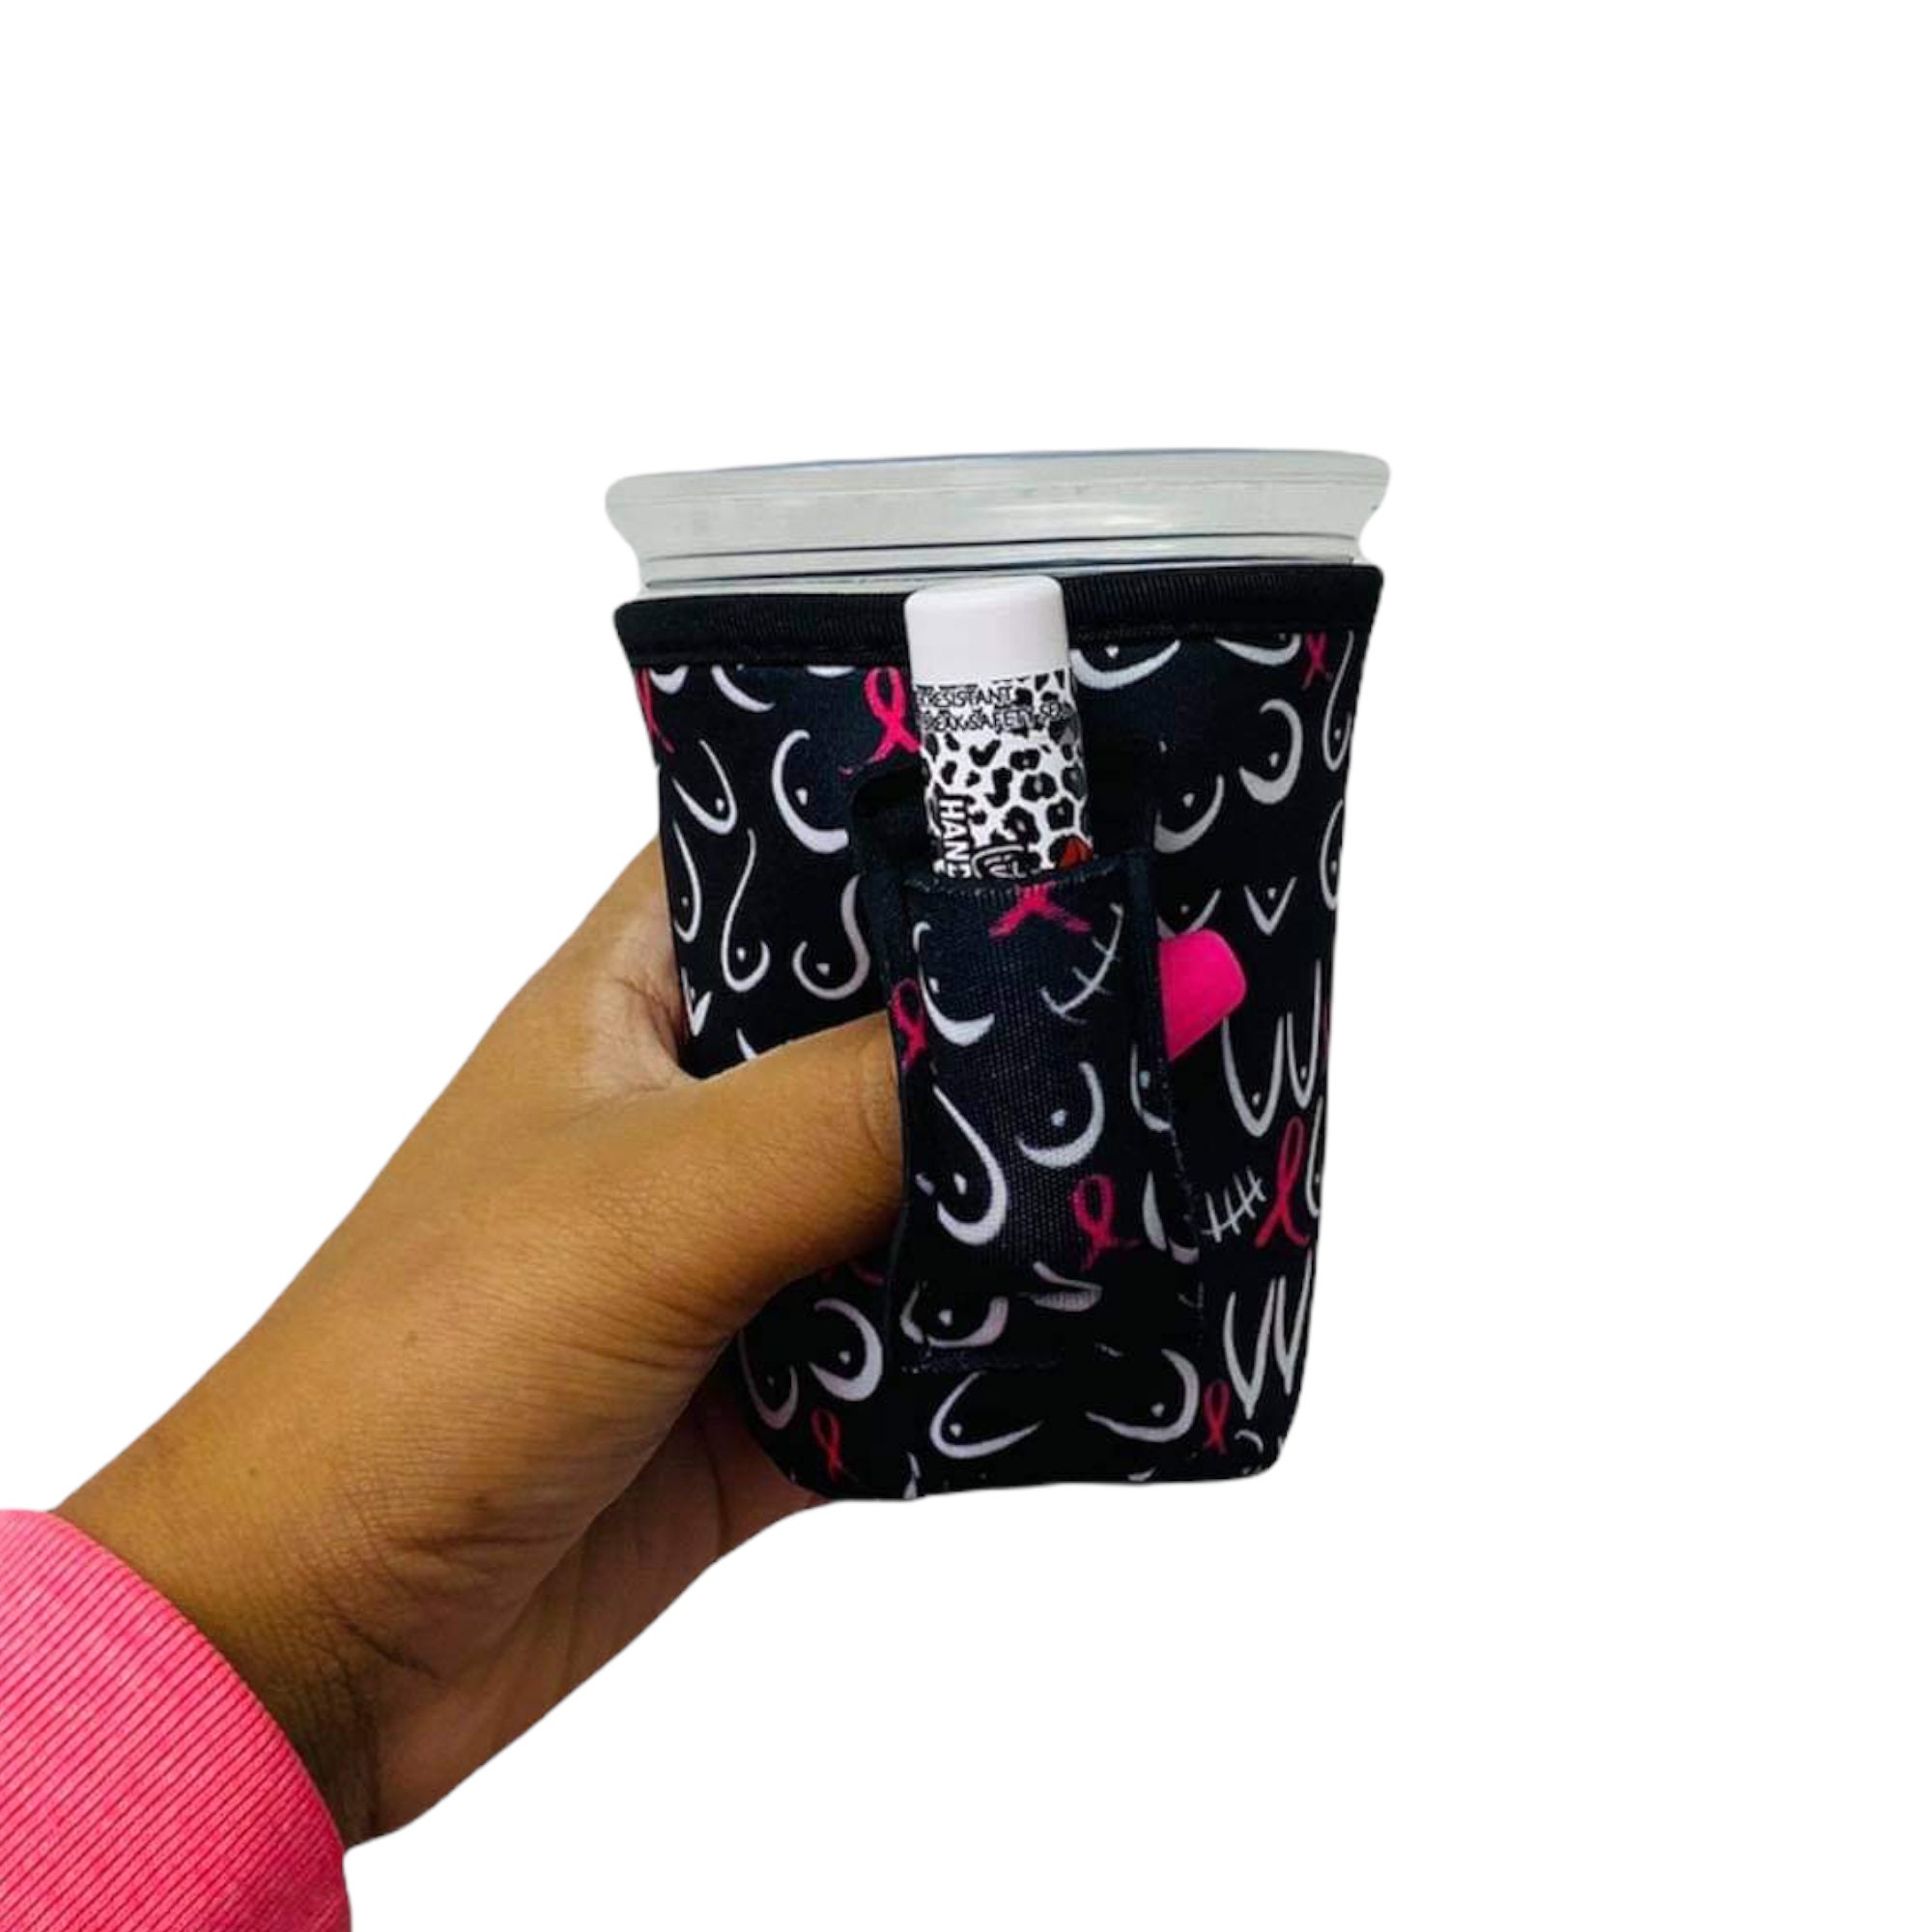 Lit Handlers 12 oz Coffee Cup Sleeve - Neoprene Cup Holder with